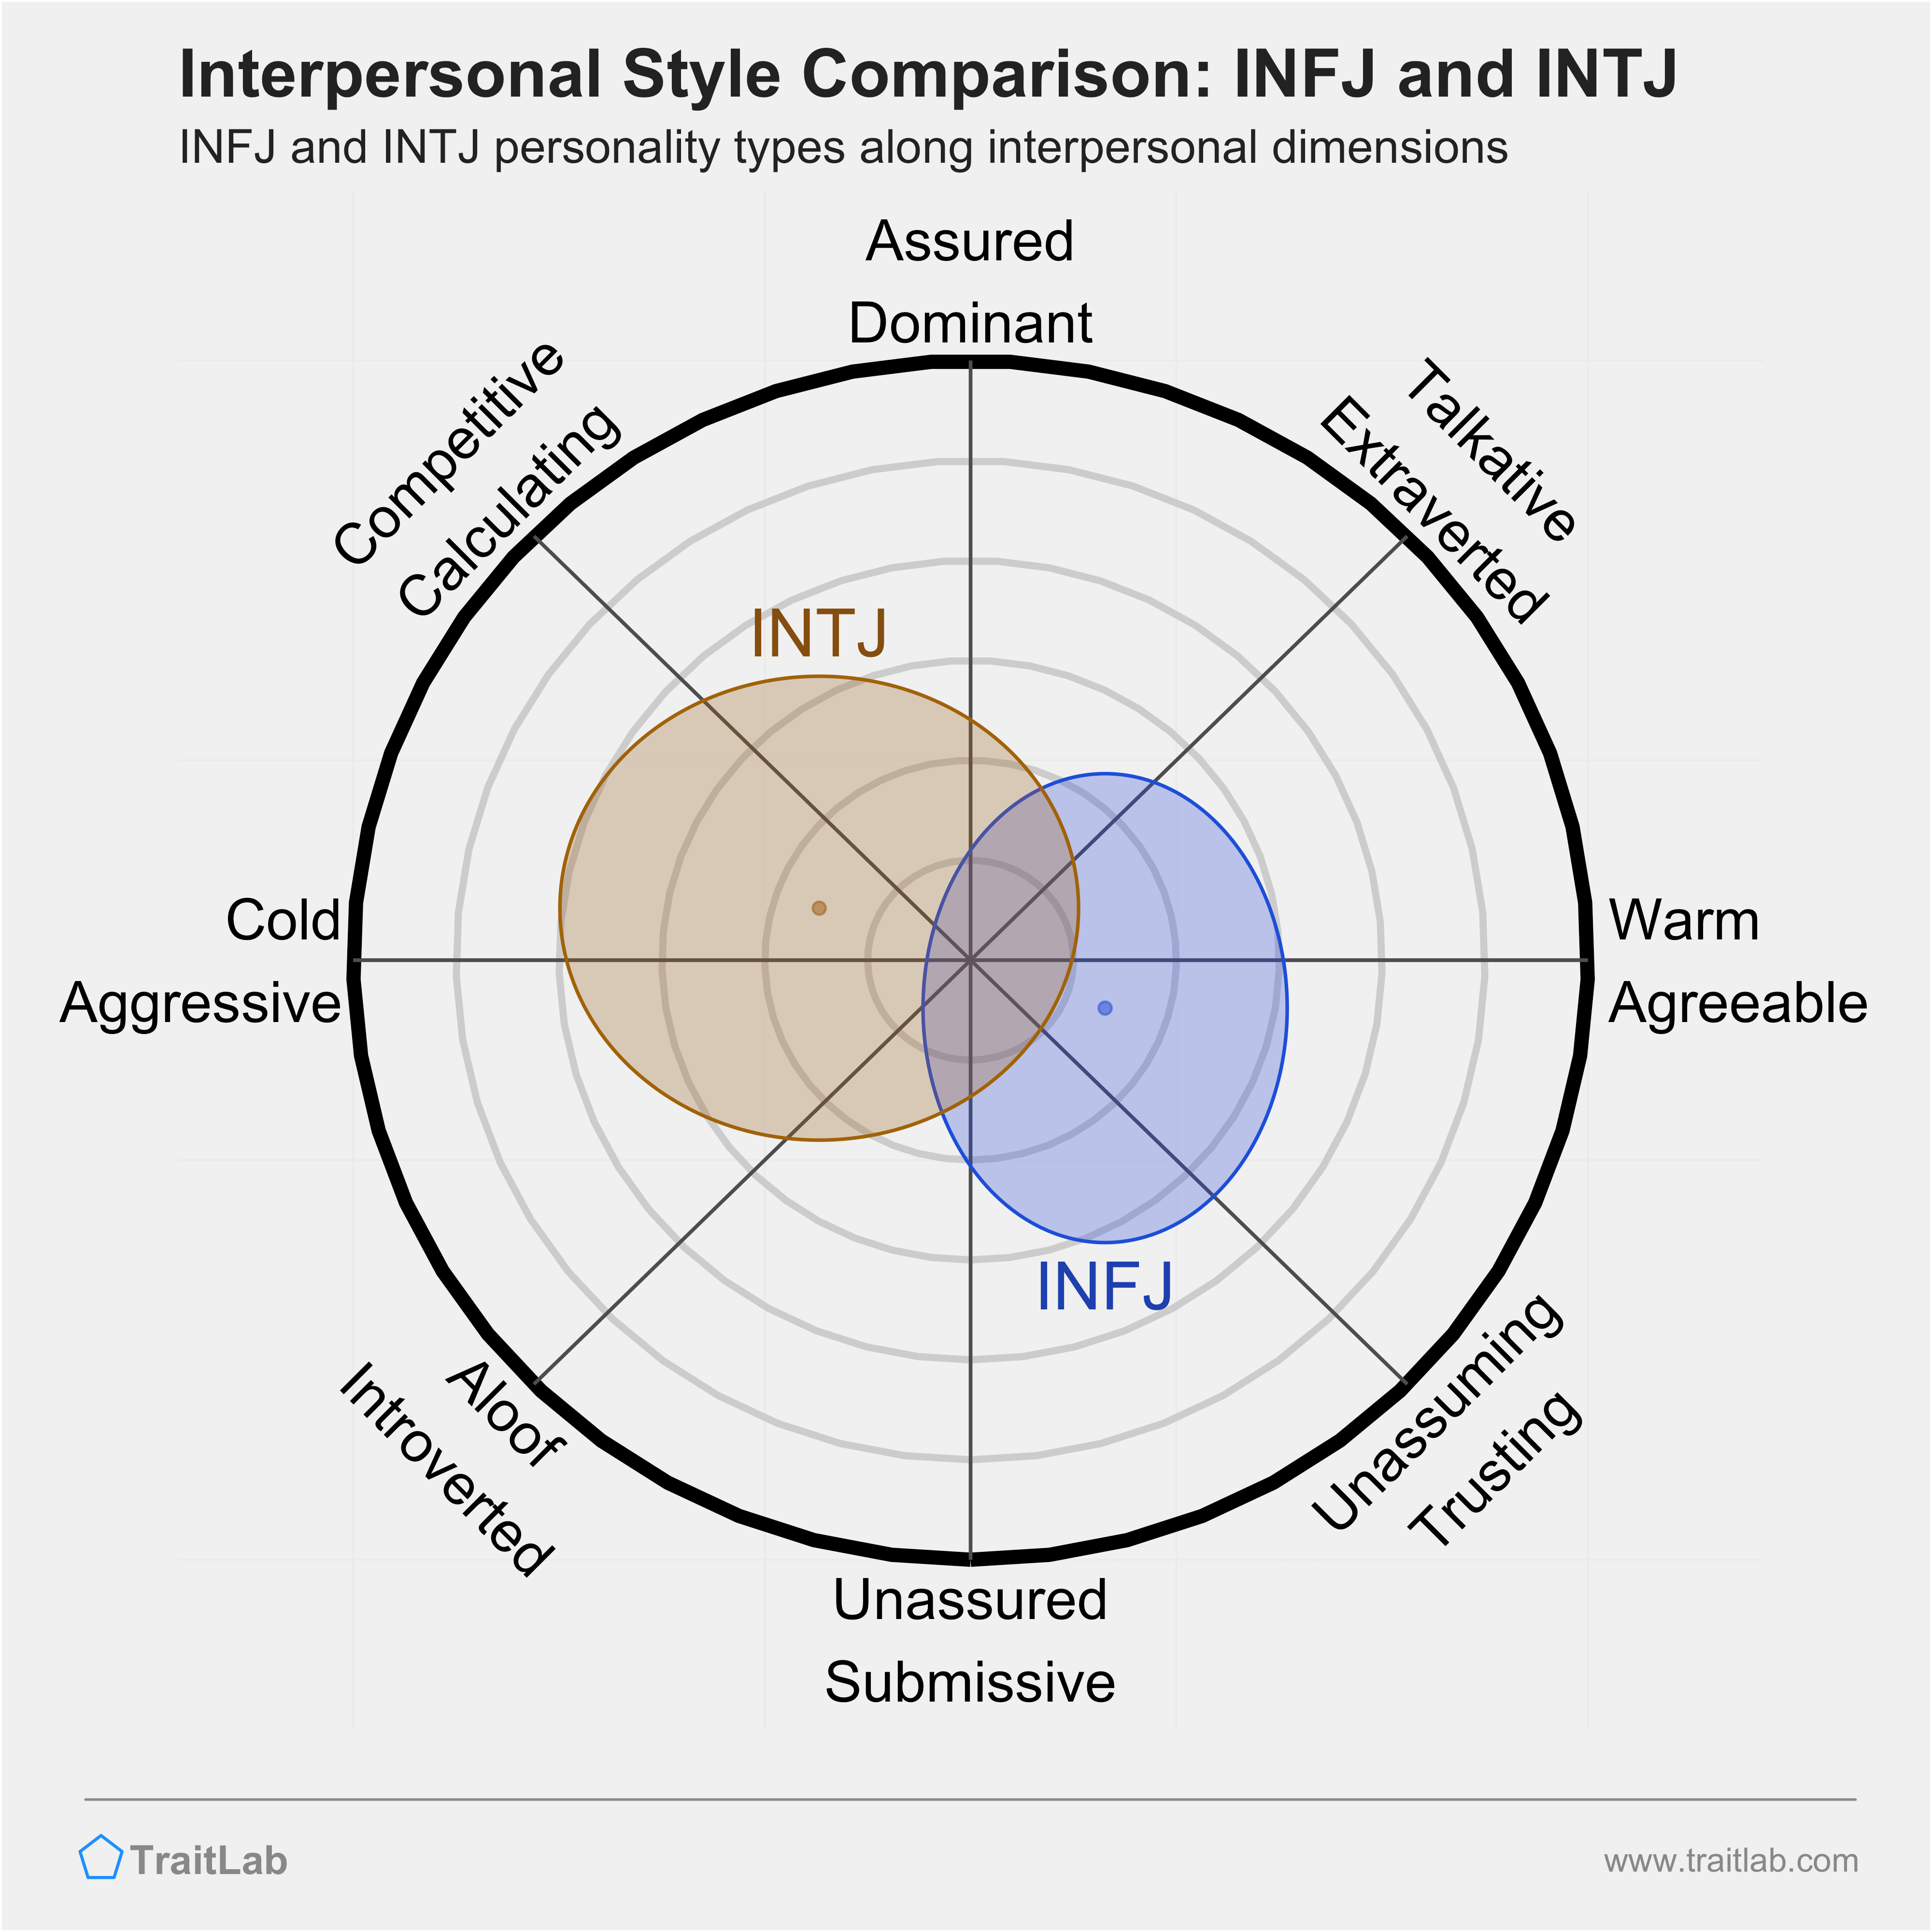 INFJ and INTJ comparison across interpersonal dimensions